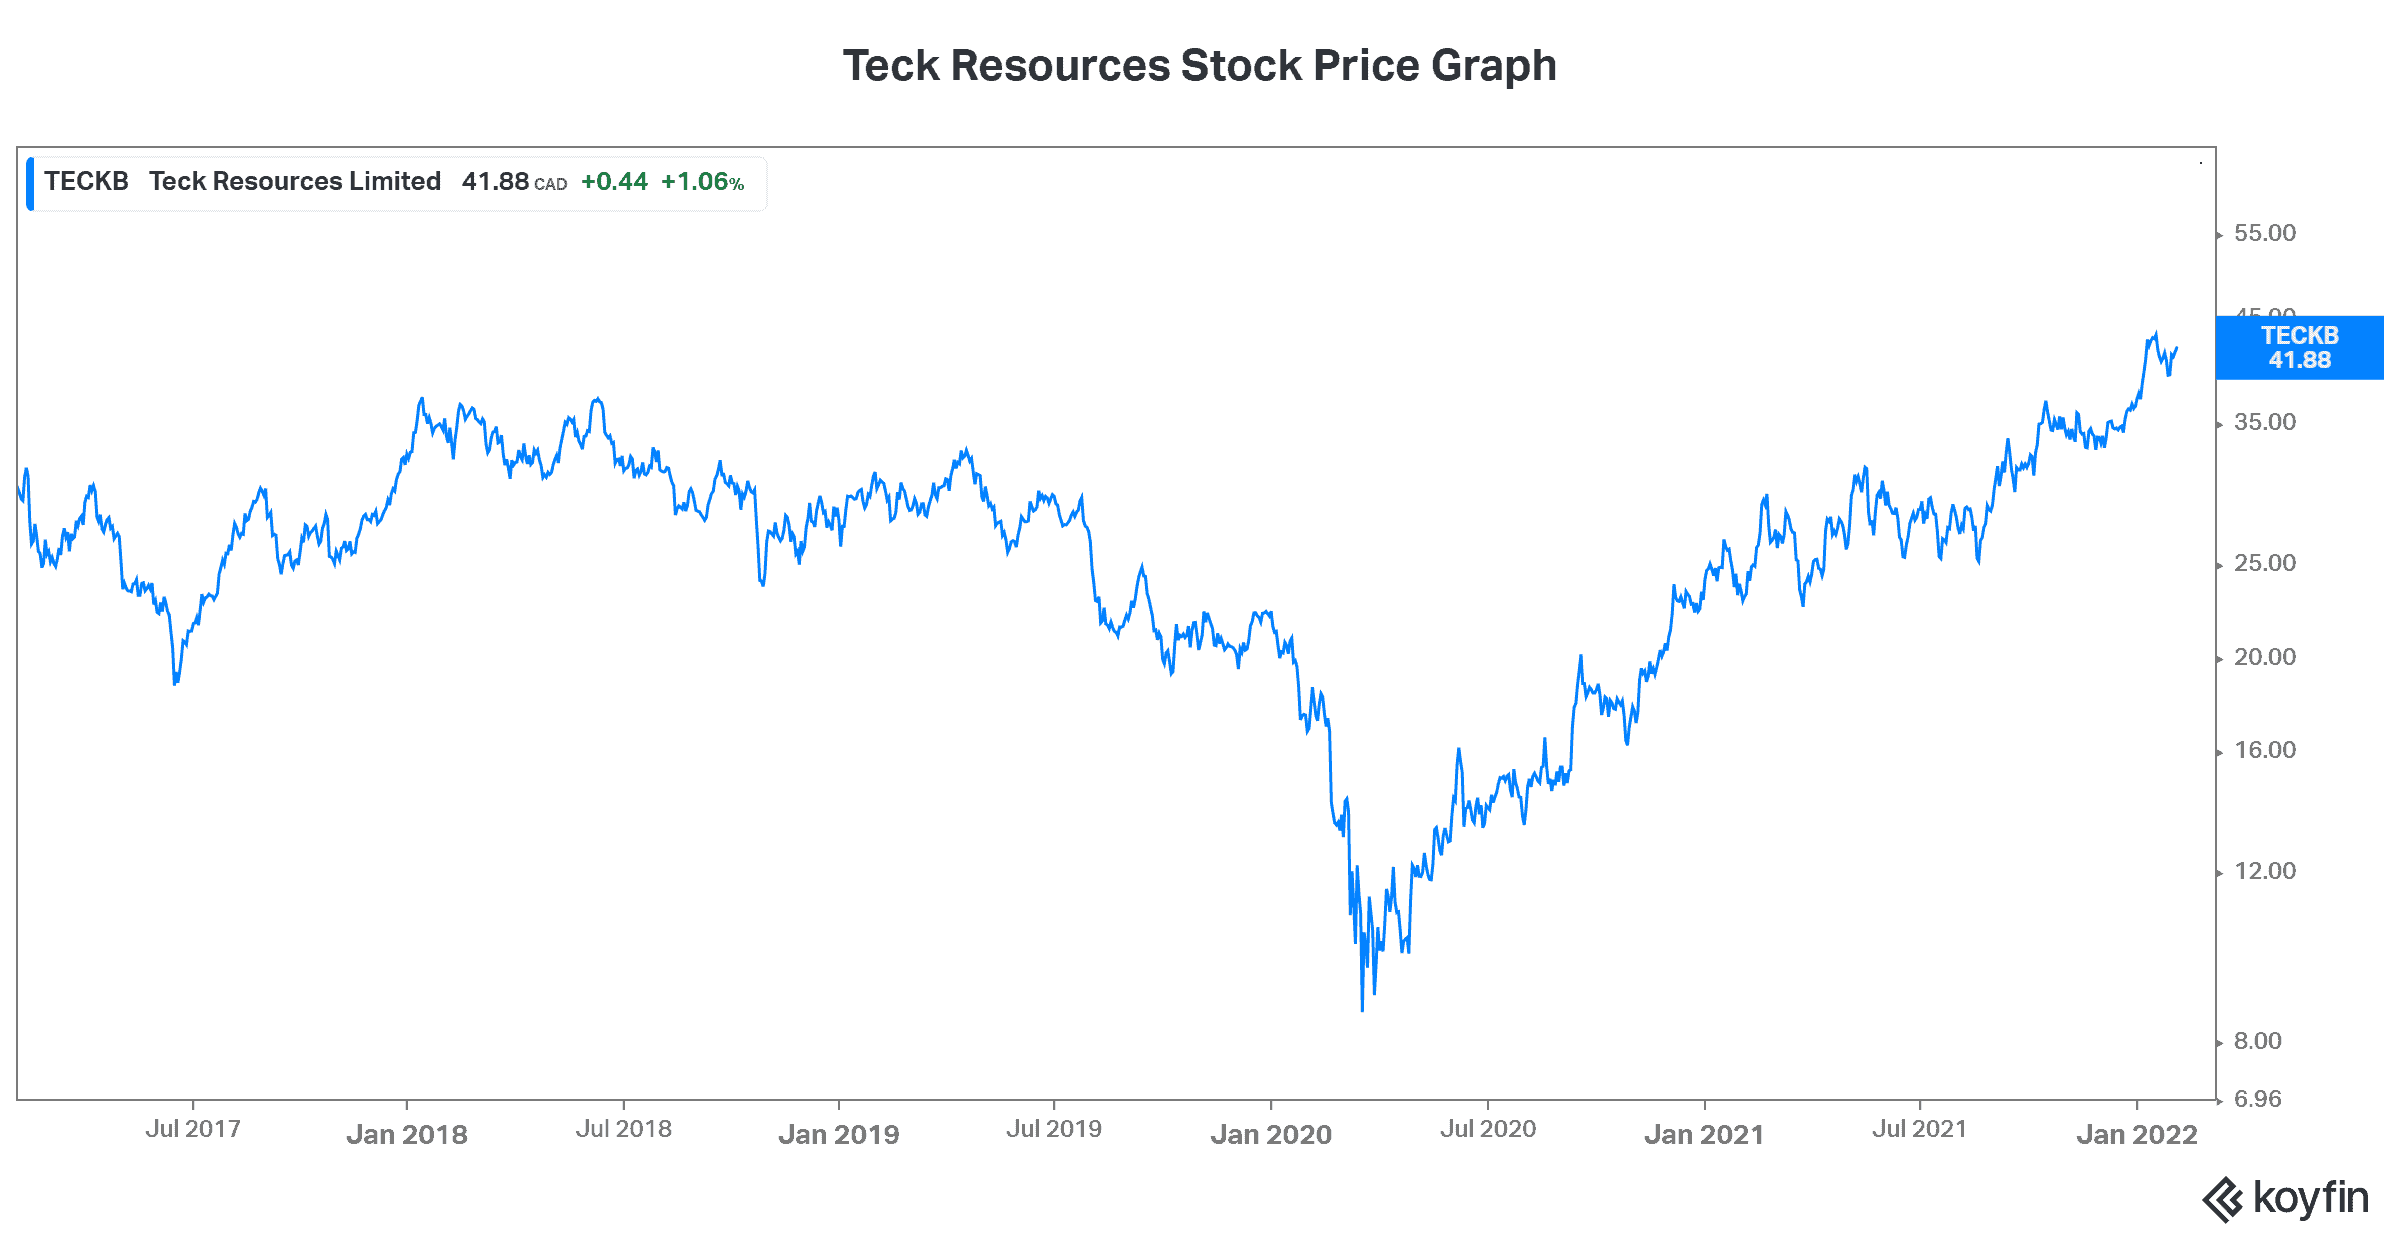 Teck Resources stock Teck b stock value stock